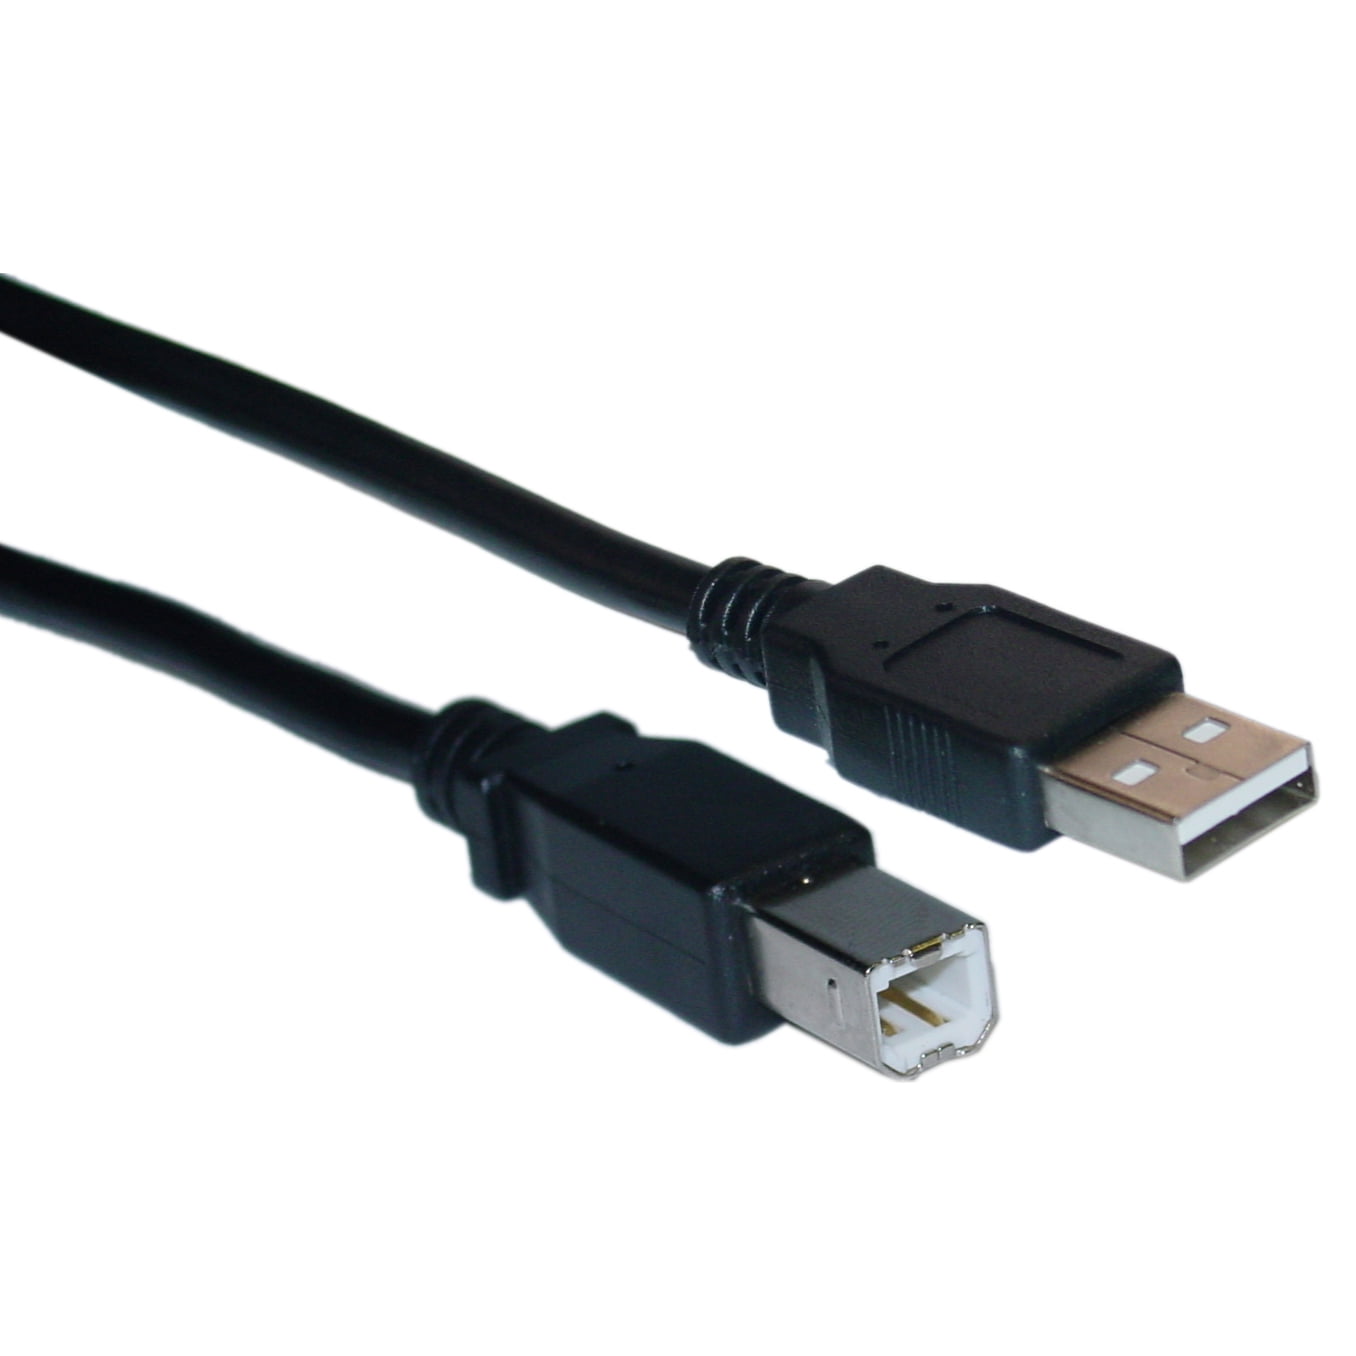 Printer Parts 21P Same Surface 15cm Length USB Printer Cable for dx4 Head 